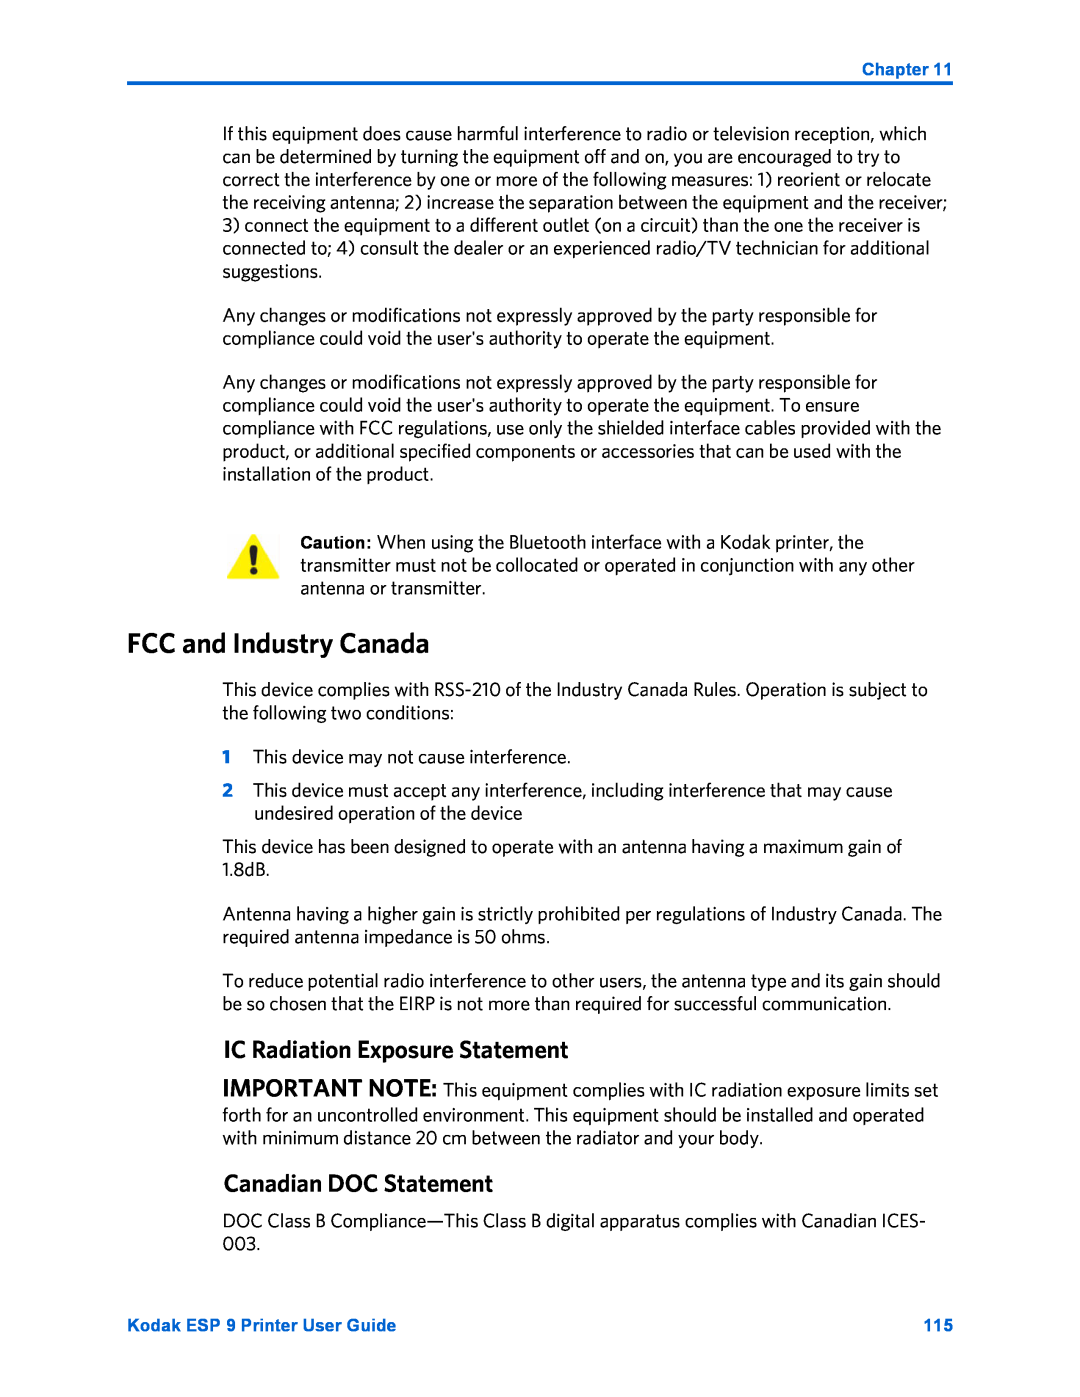 Kodak ESP 9 manual FCC and Industry Canada, IC Radiation Exposure Statement, Canadian DOC Statement 